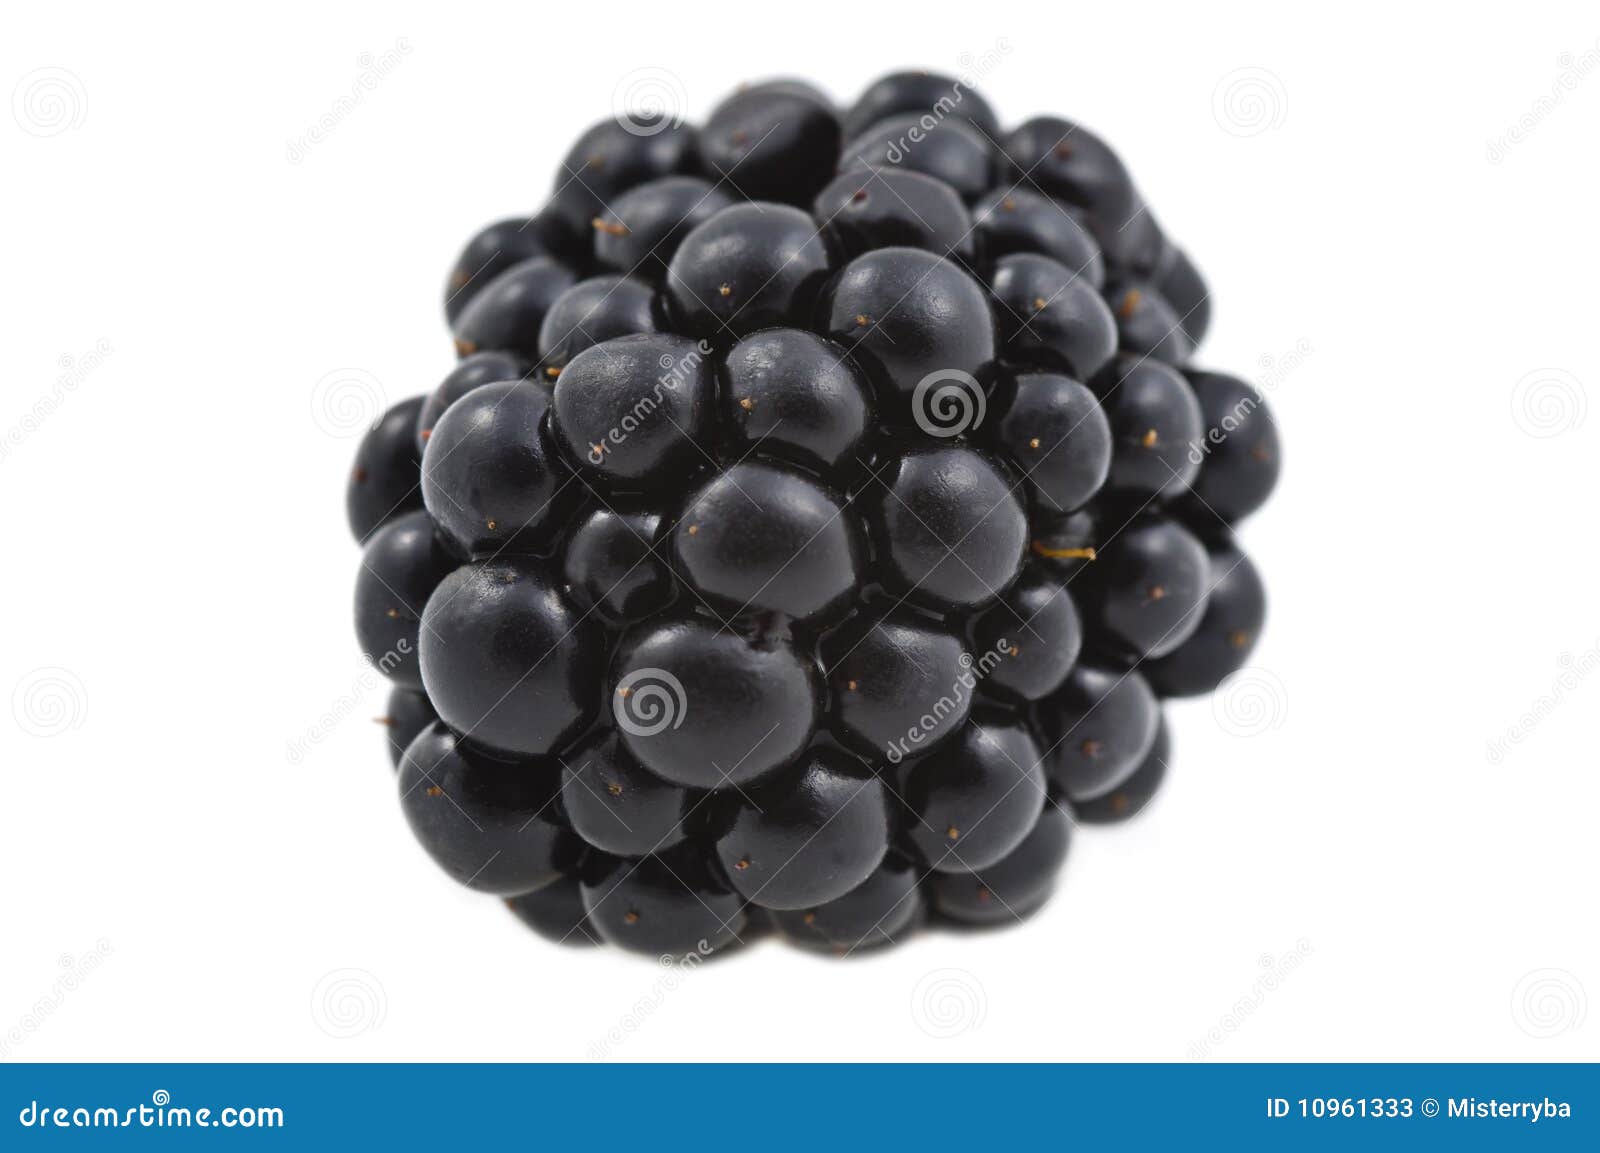 One Fresh Blackberry stock image. Image of food, health - 10961333